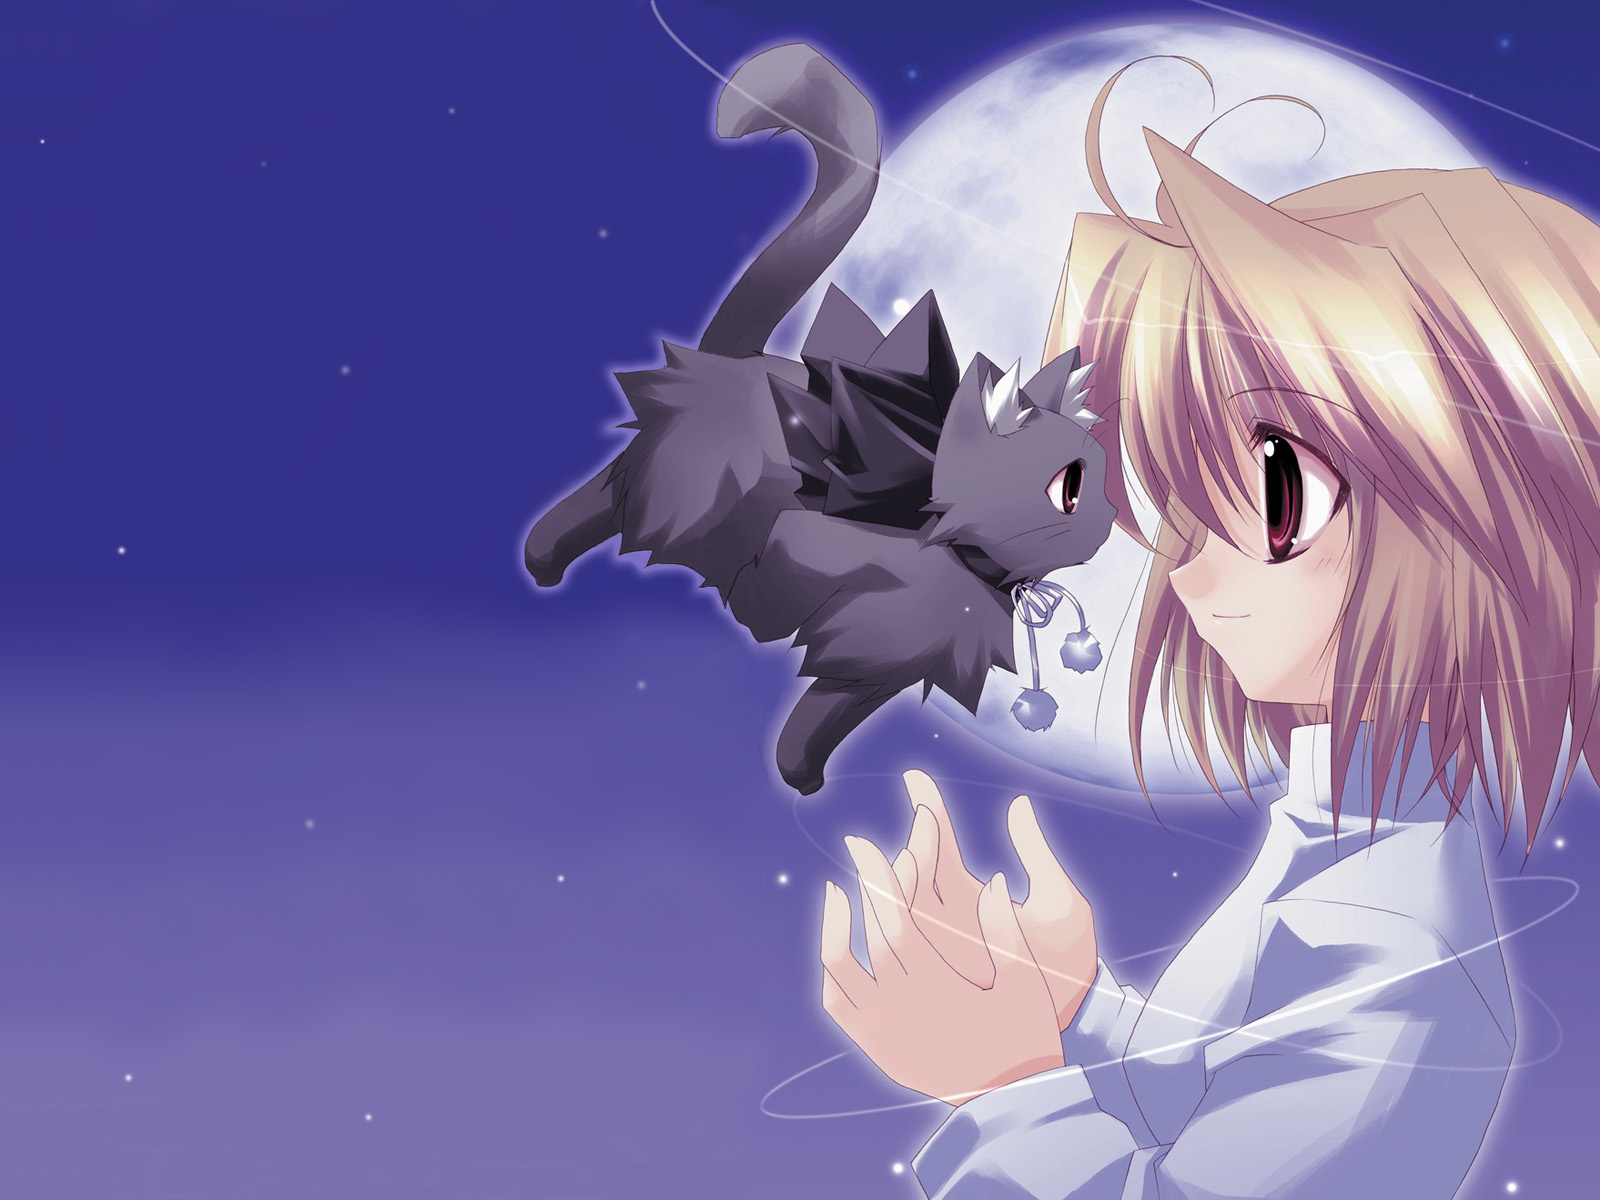 anime cat wallpaper,dibujos animados,cielo,anime,cg artwork,personaje de ficción